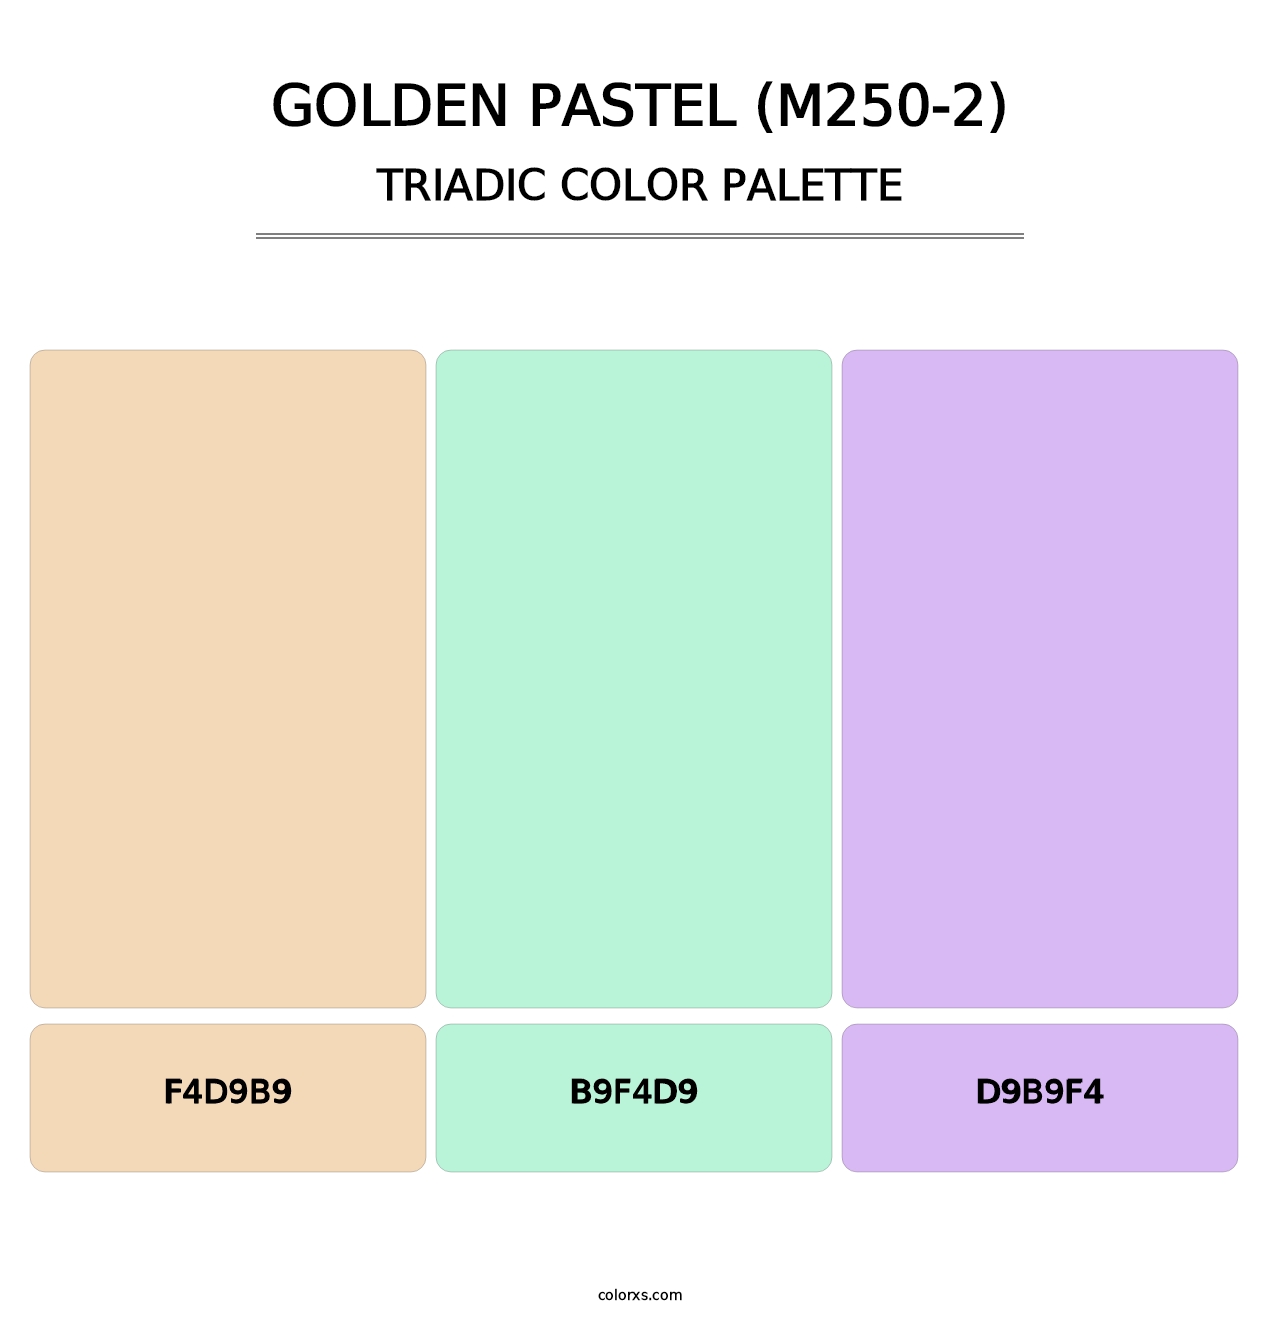 Golden Pastel (M250-2) - Triadic Color Palette